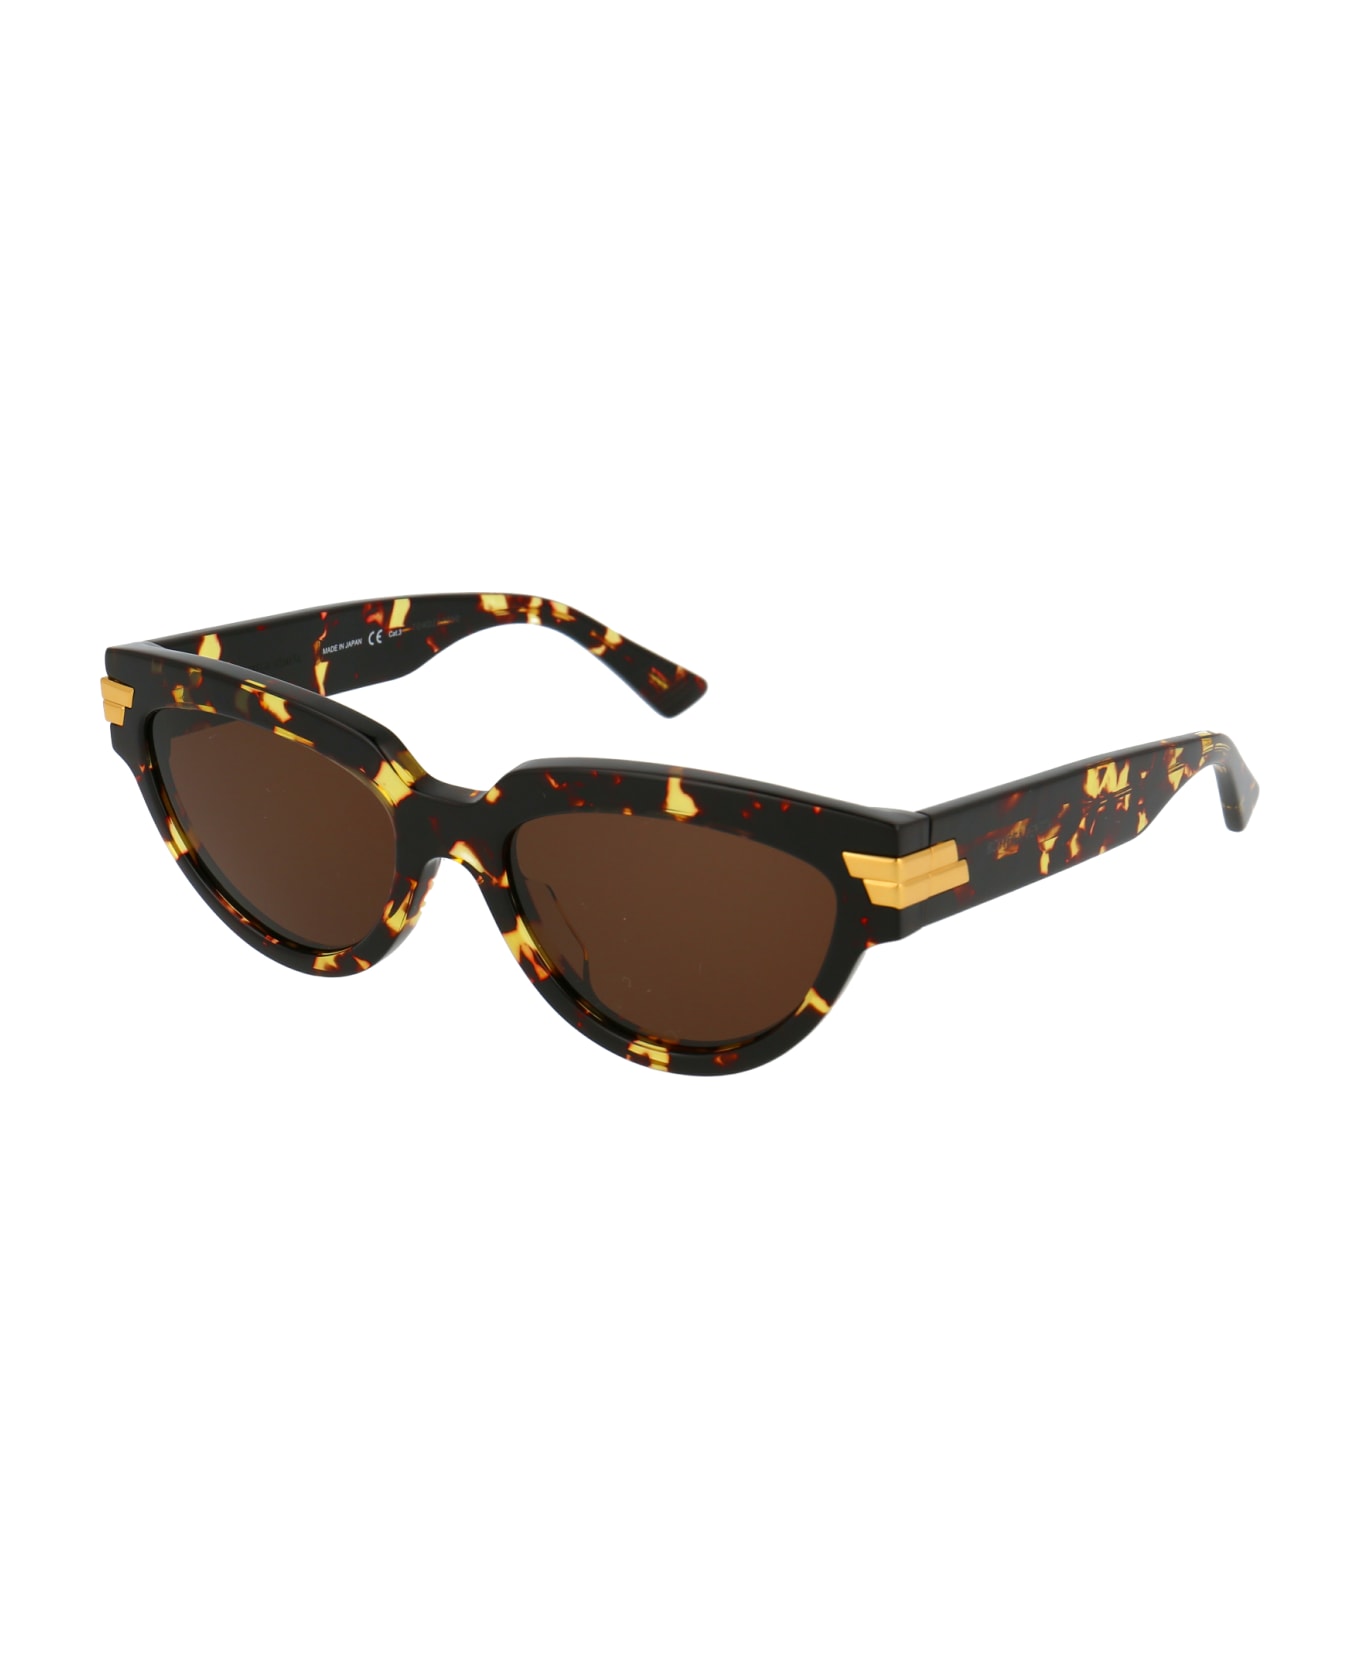 Bottega Veneta Eyewear Bv1035s Sunglasses - 002 HAVANA HAVANA BROWN サングラス